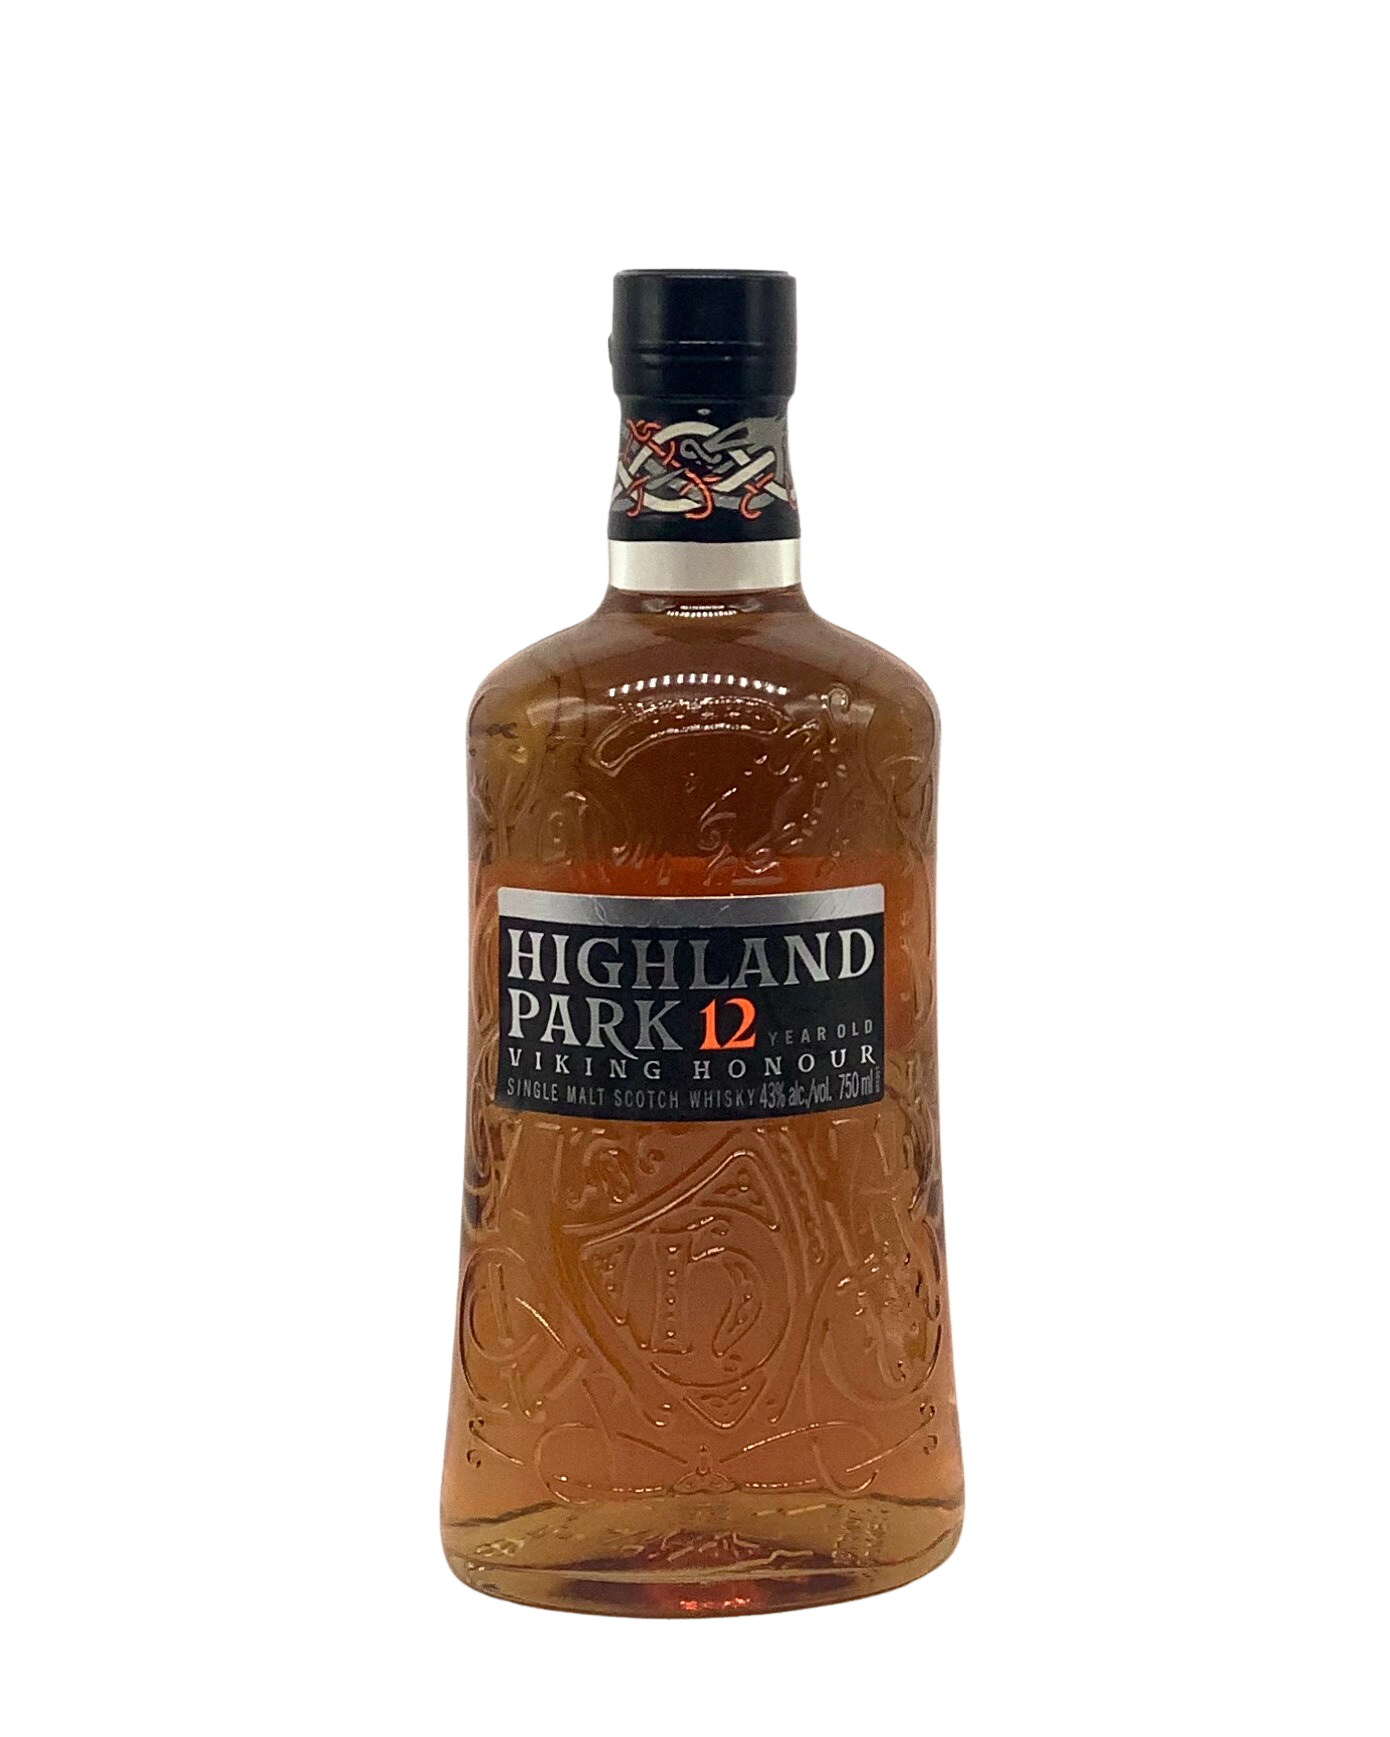 Highland Park 12 Year "Viking Honour" Single Malt Scotch Whisky